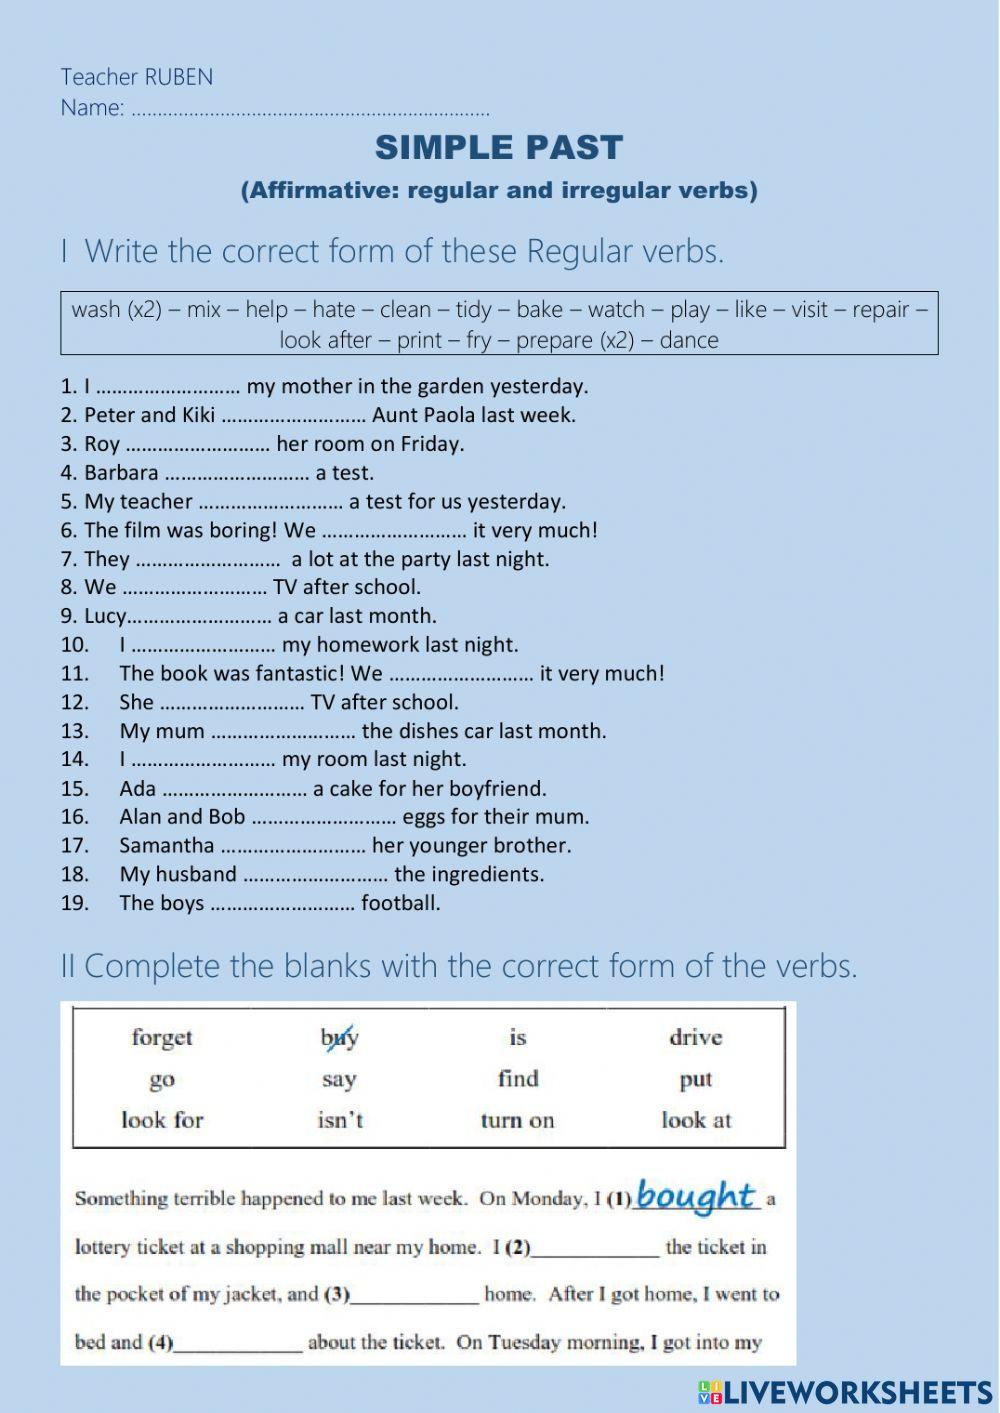 Simple past of regular and irregular verbs worksheet | Live Worksheets